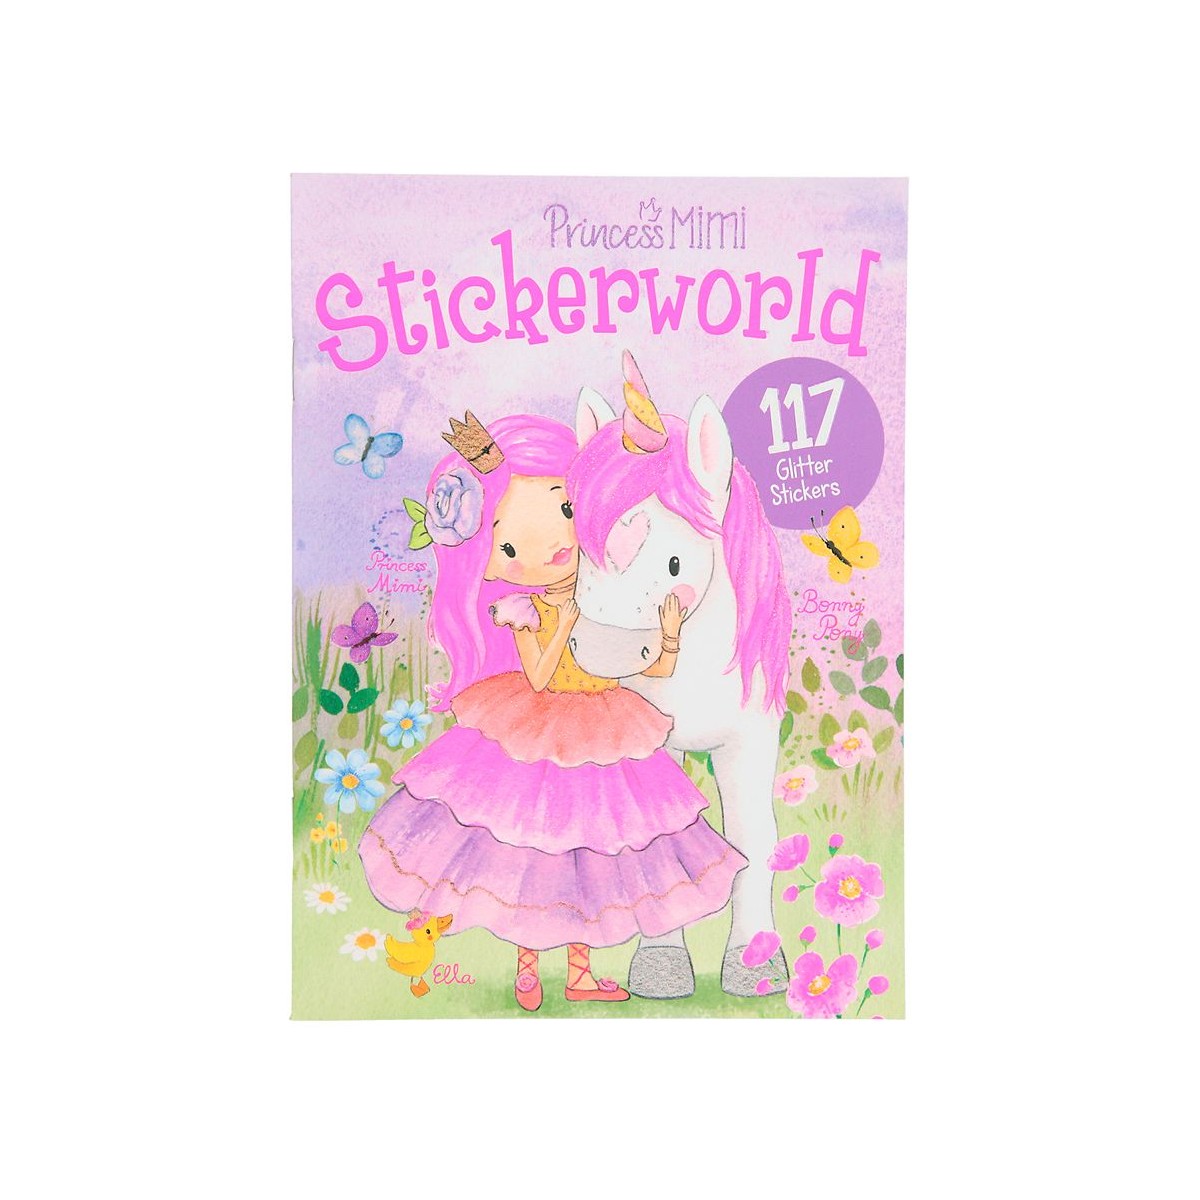 Depesche - Princess Mimi s - Stickerworld Mini